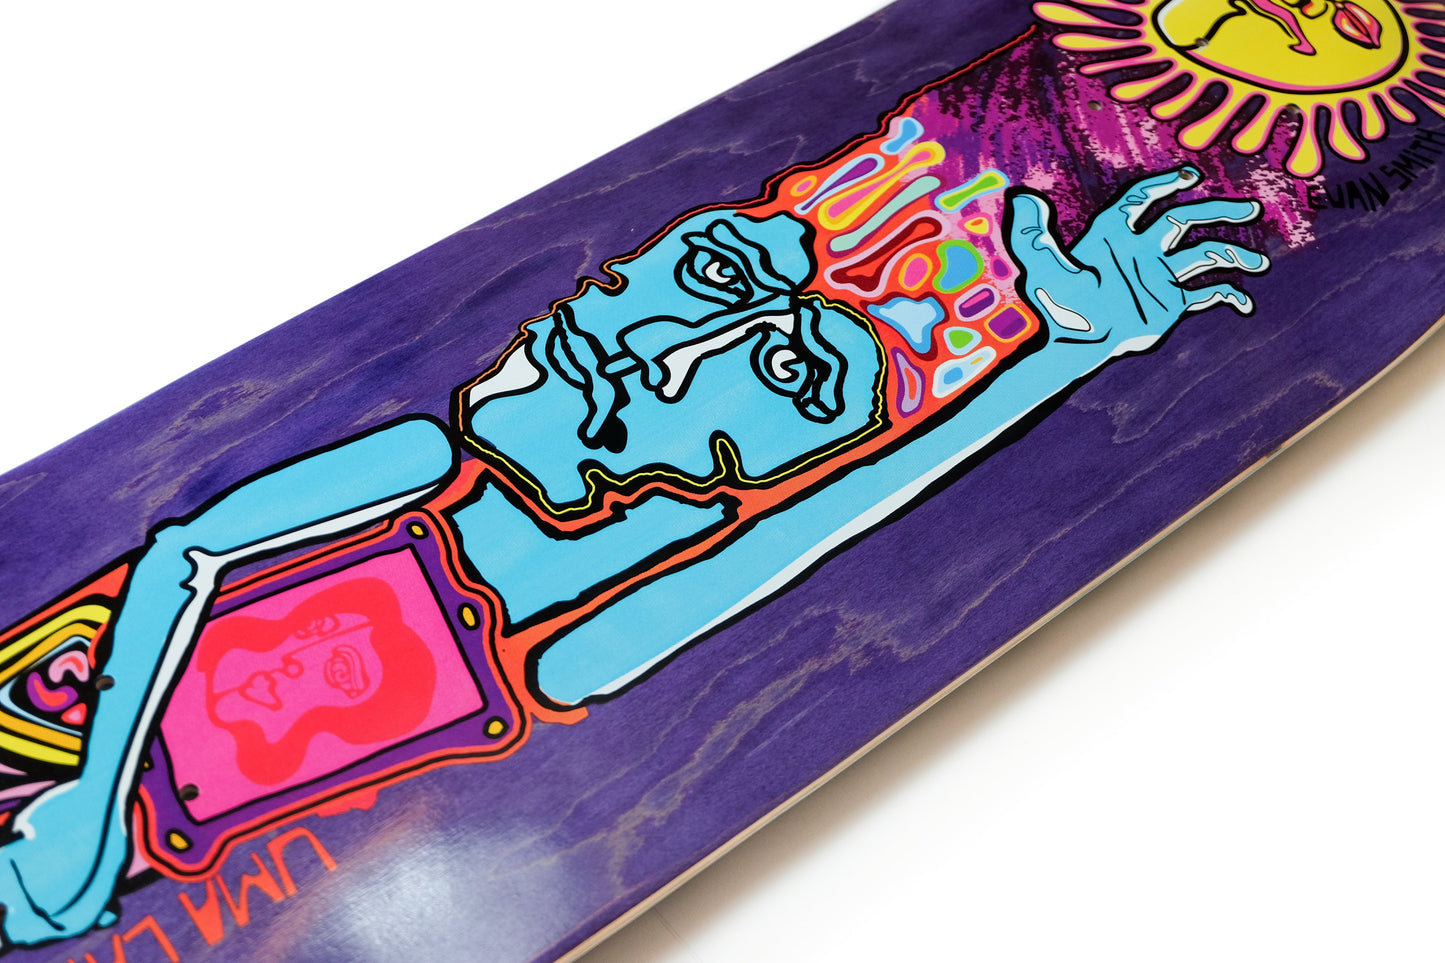 Uma Streams Evan Smith 8.625" on Headroom skateboard deck - Custom Skateboard Builder - SkatebruhSG